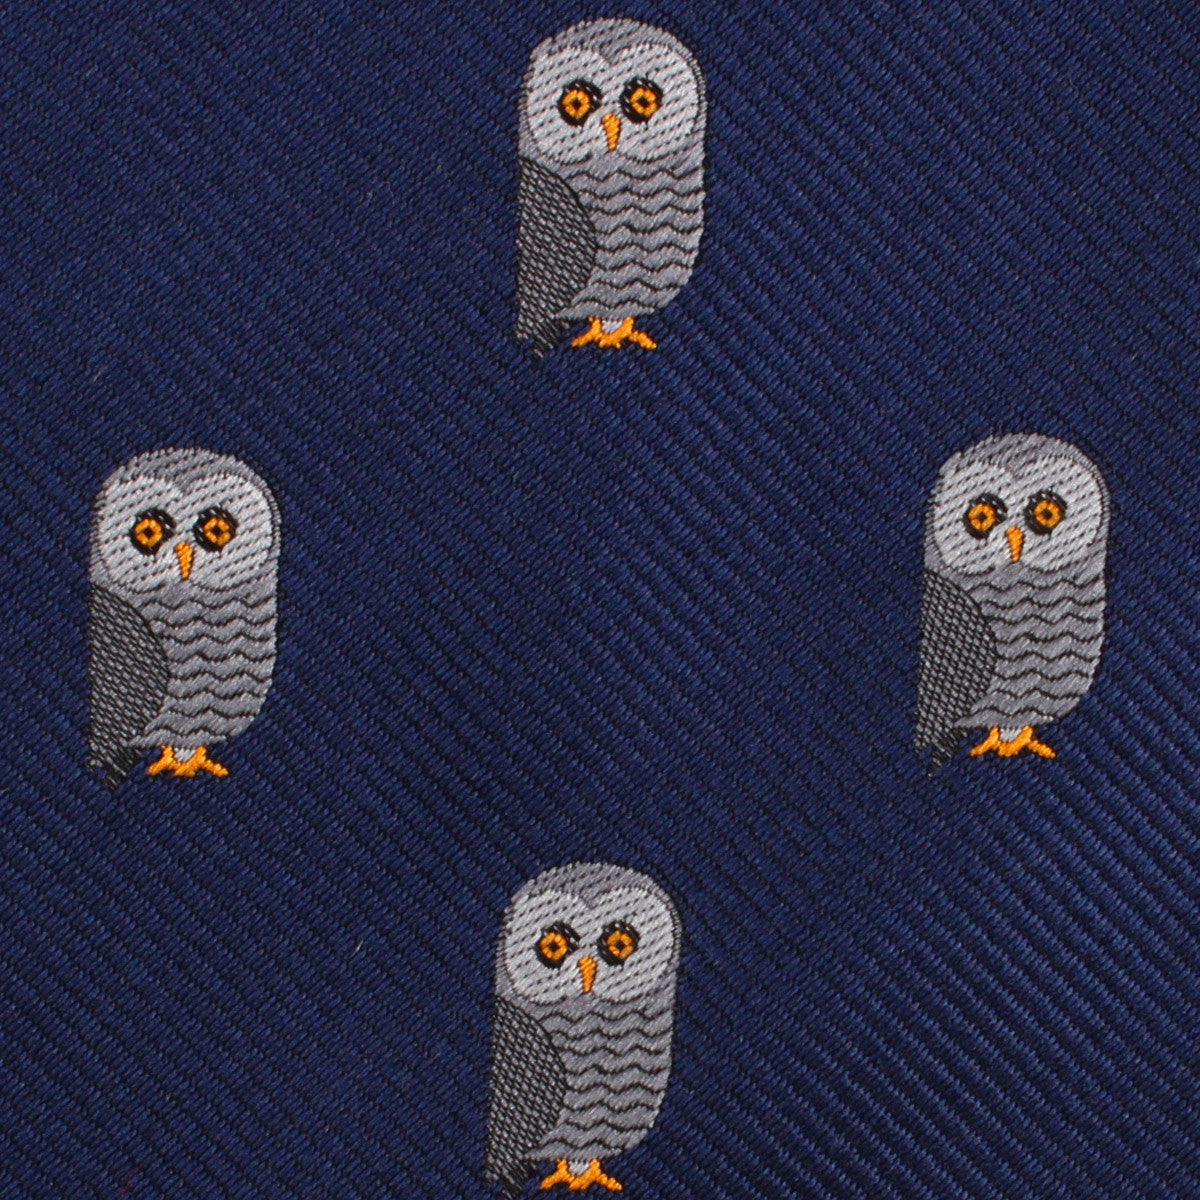 Southern Grey Owl Fabric Self Diamond Bowtie